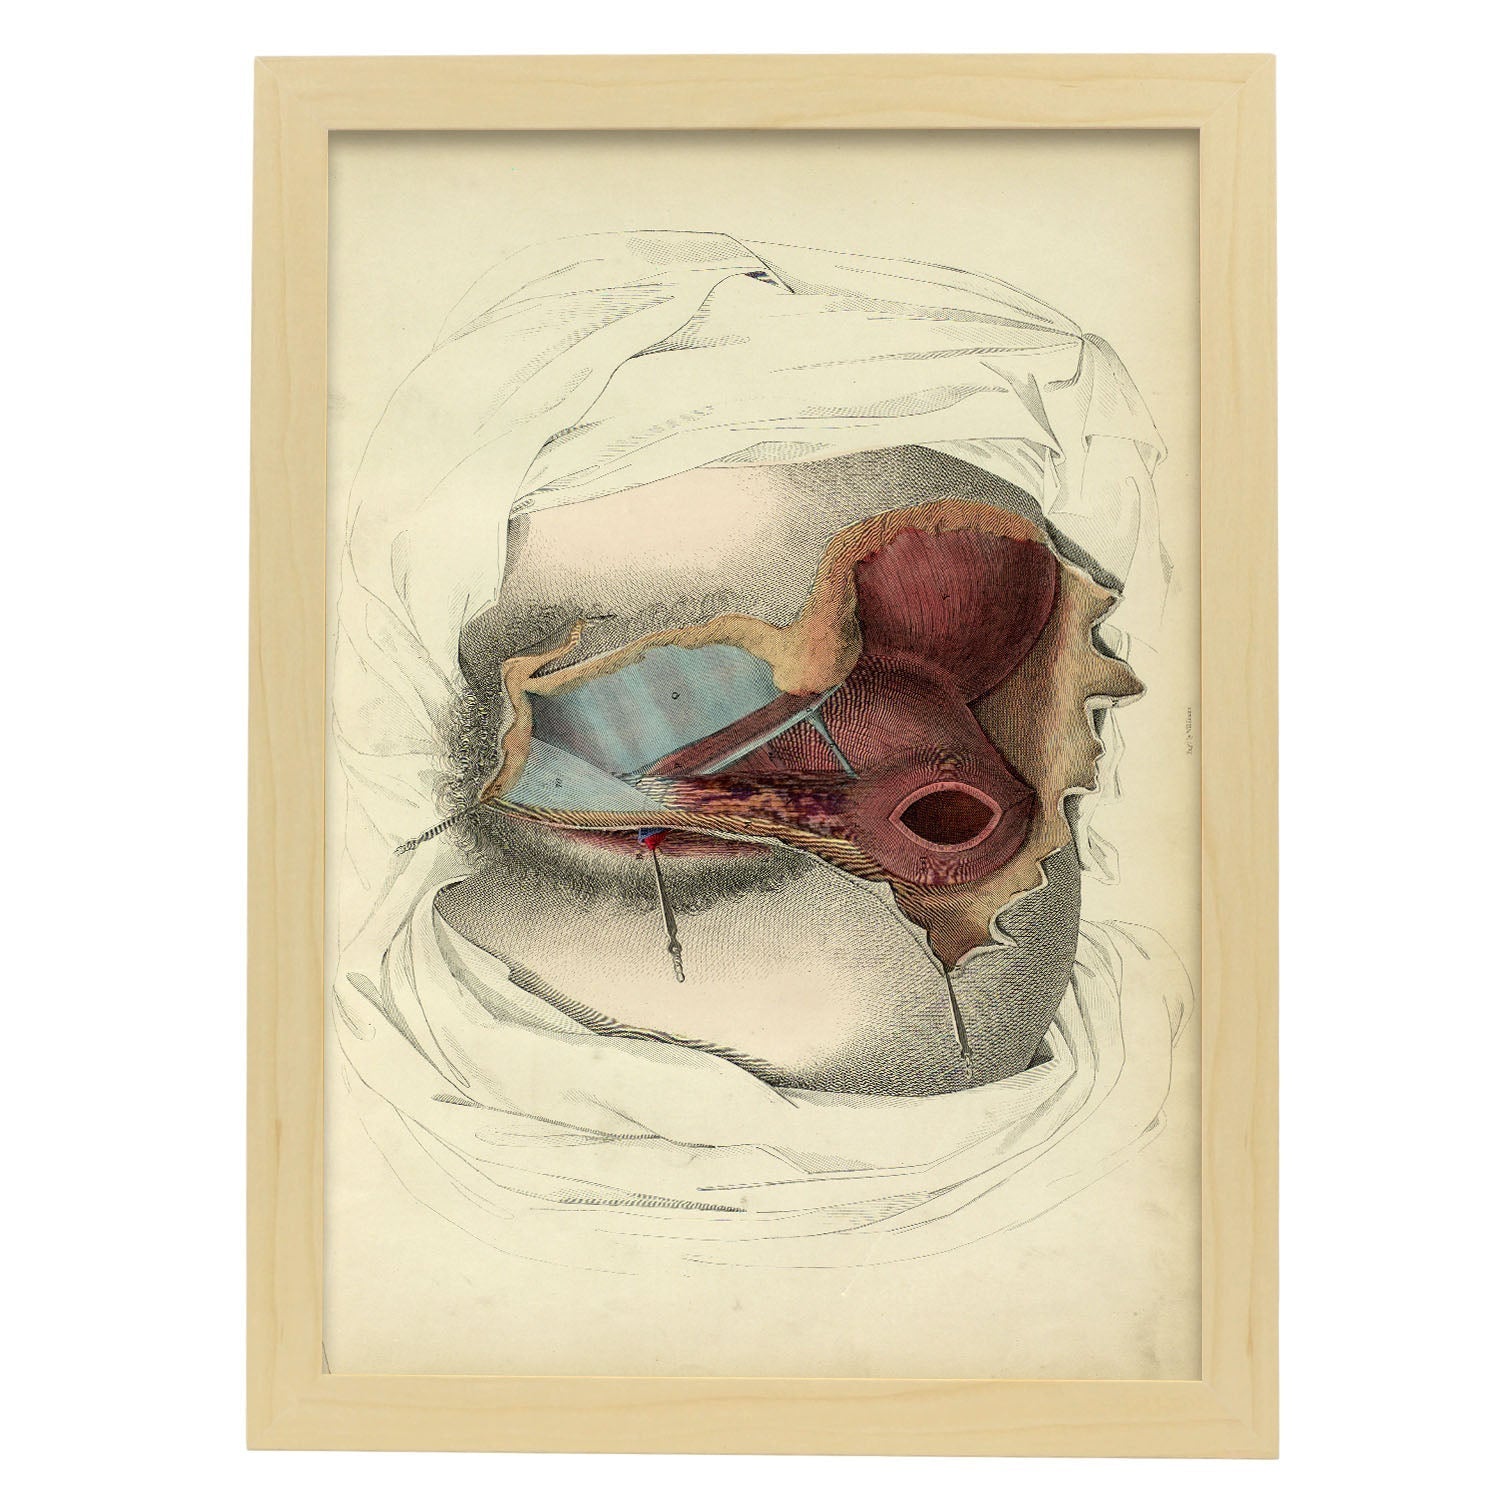 Dissection of the perineum, female-Artwork-Nacnic-A3-Marco Madera clara-Nacnic Estudio SL